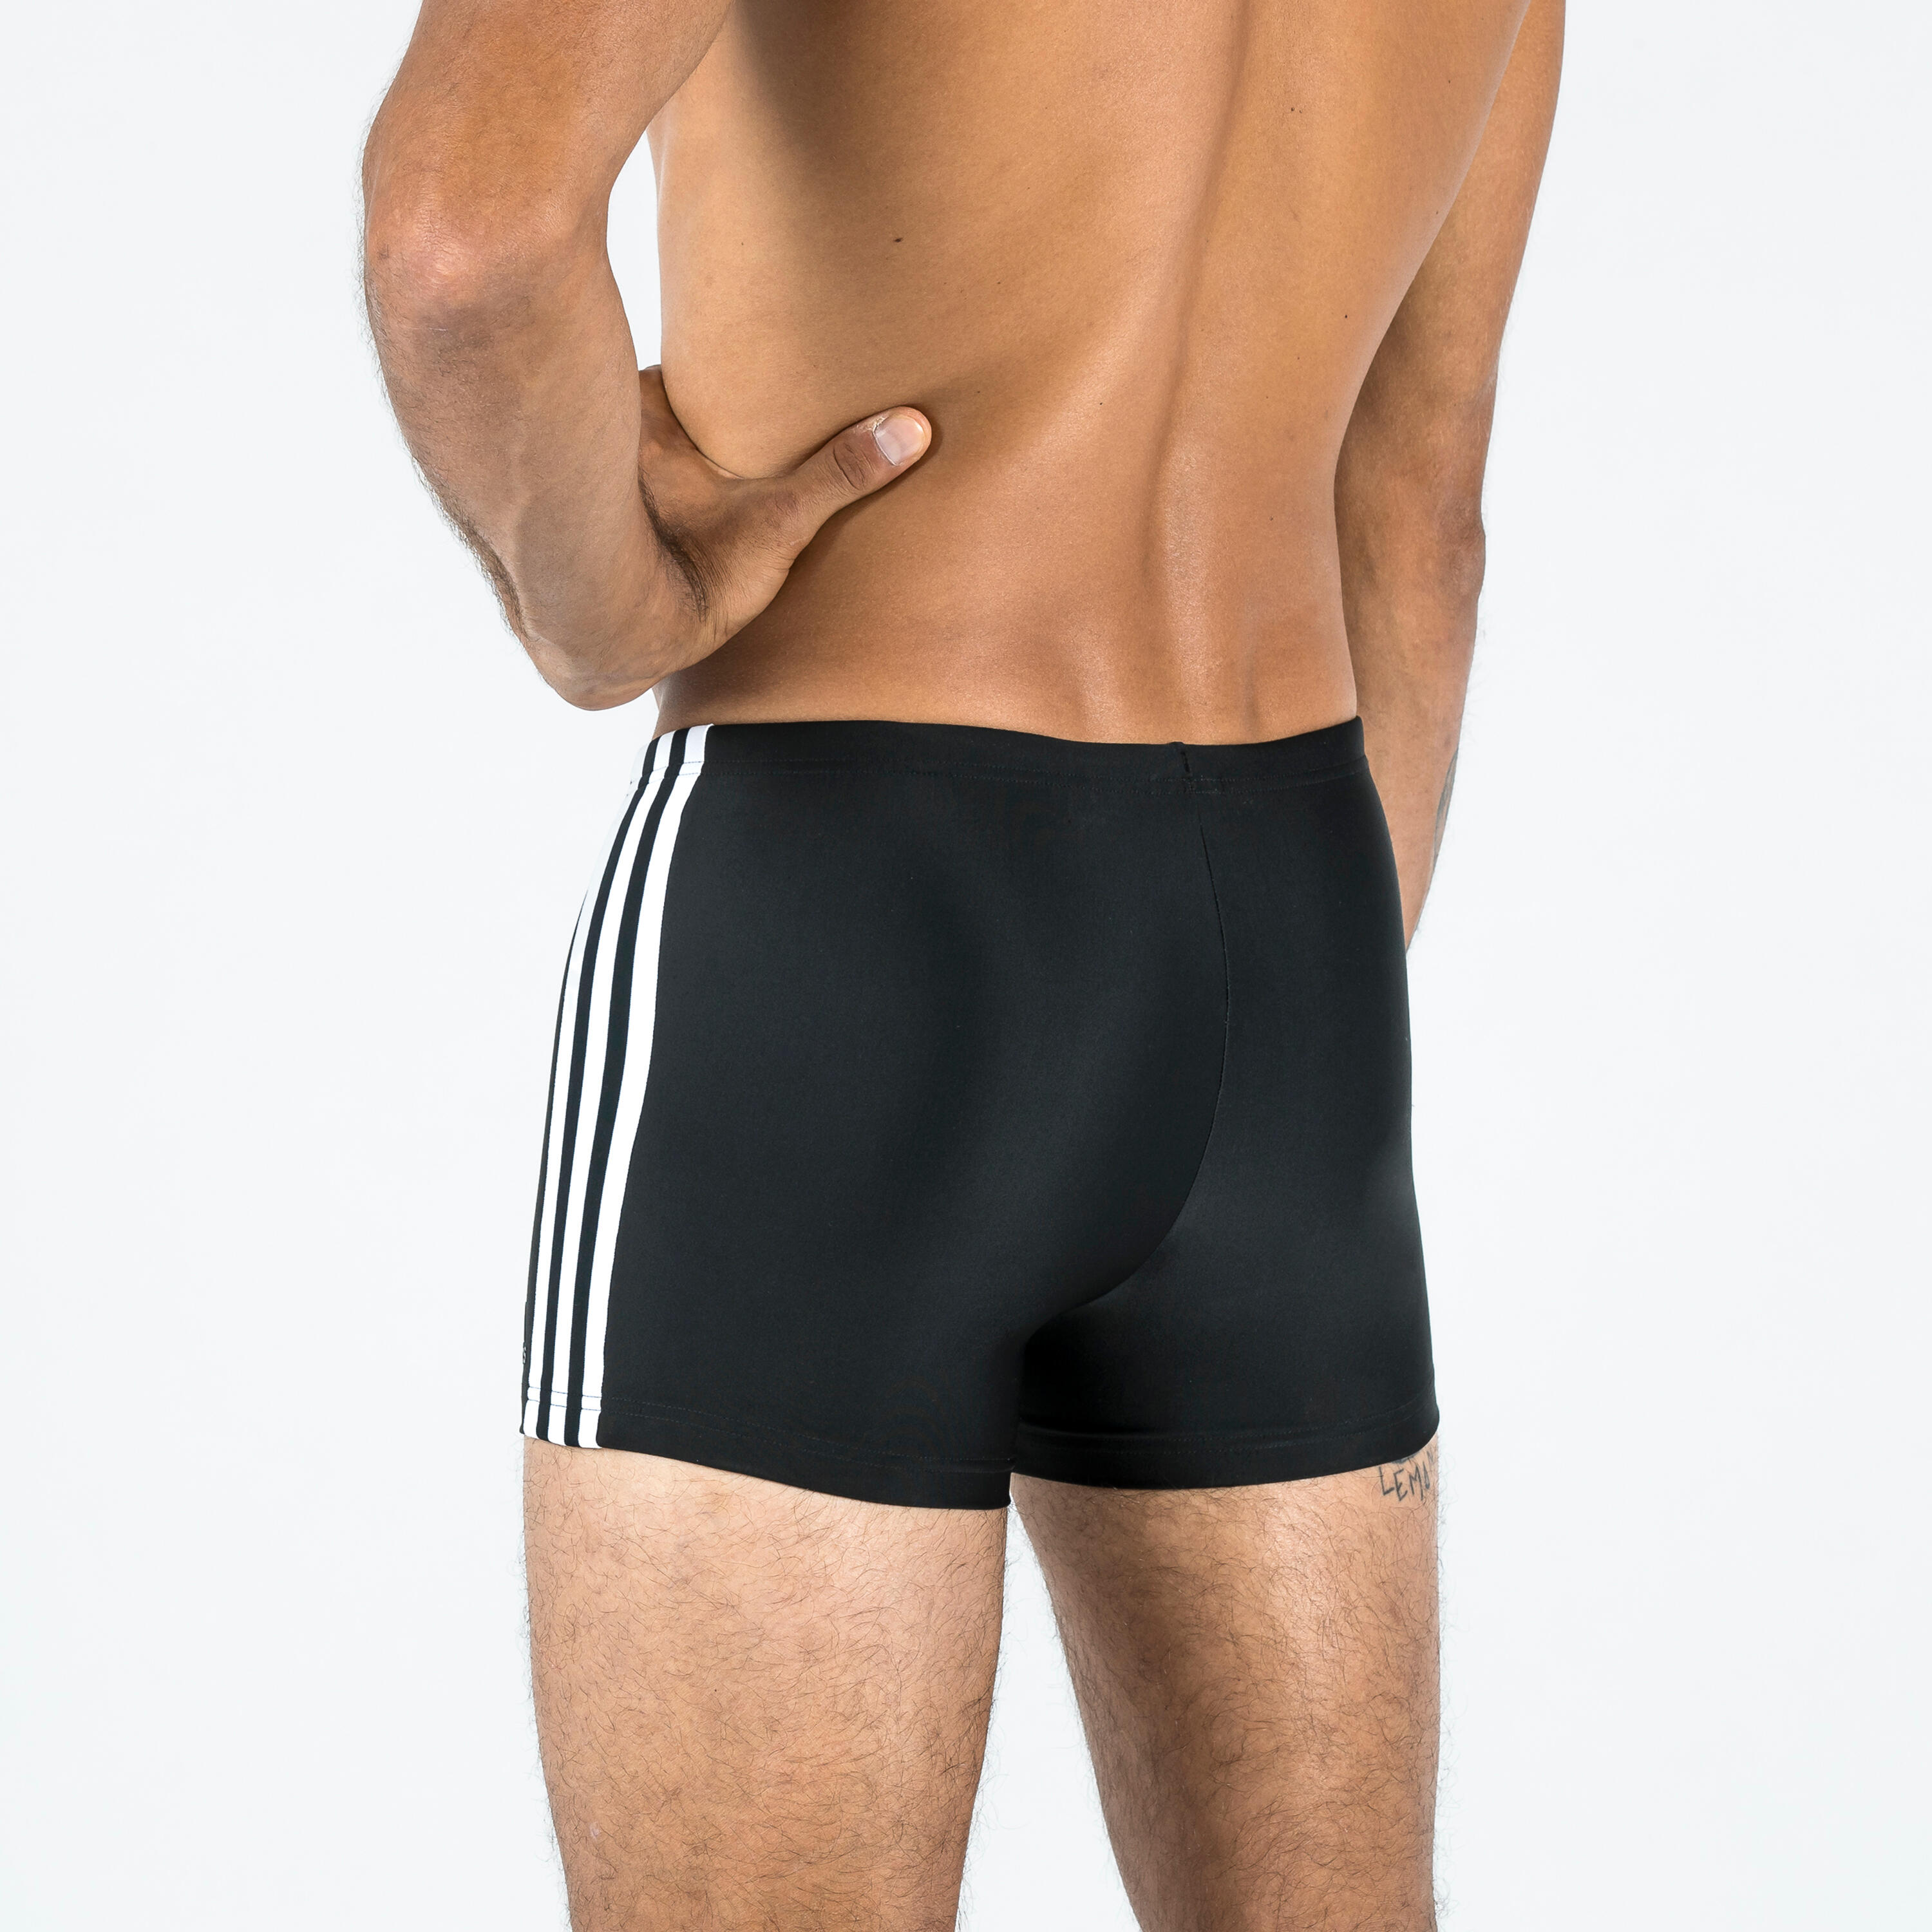 Men's swimming boxer swimsuit ADIDAS 3S black white 4/5